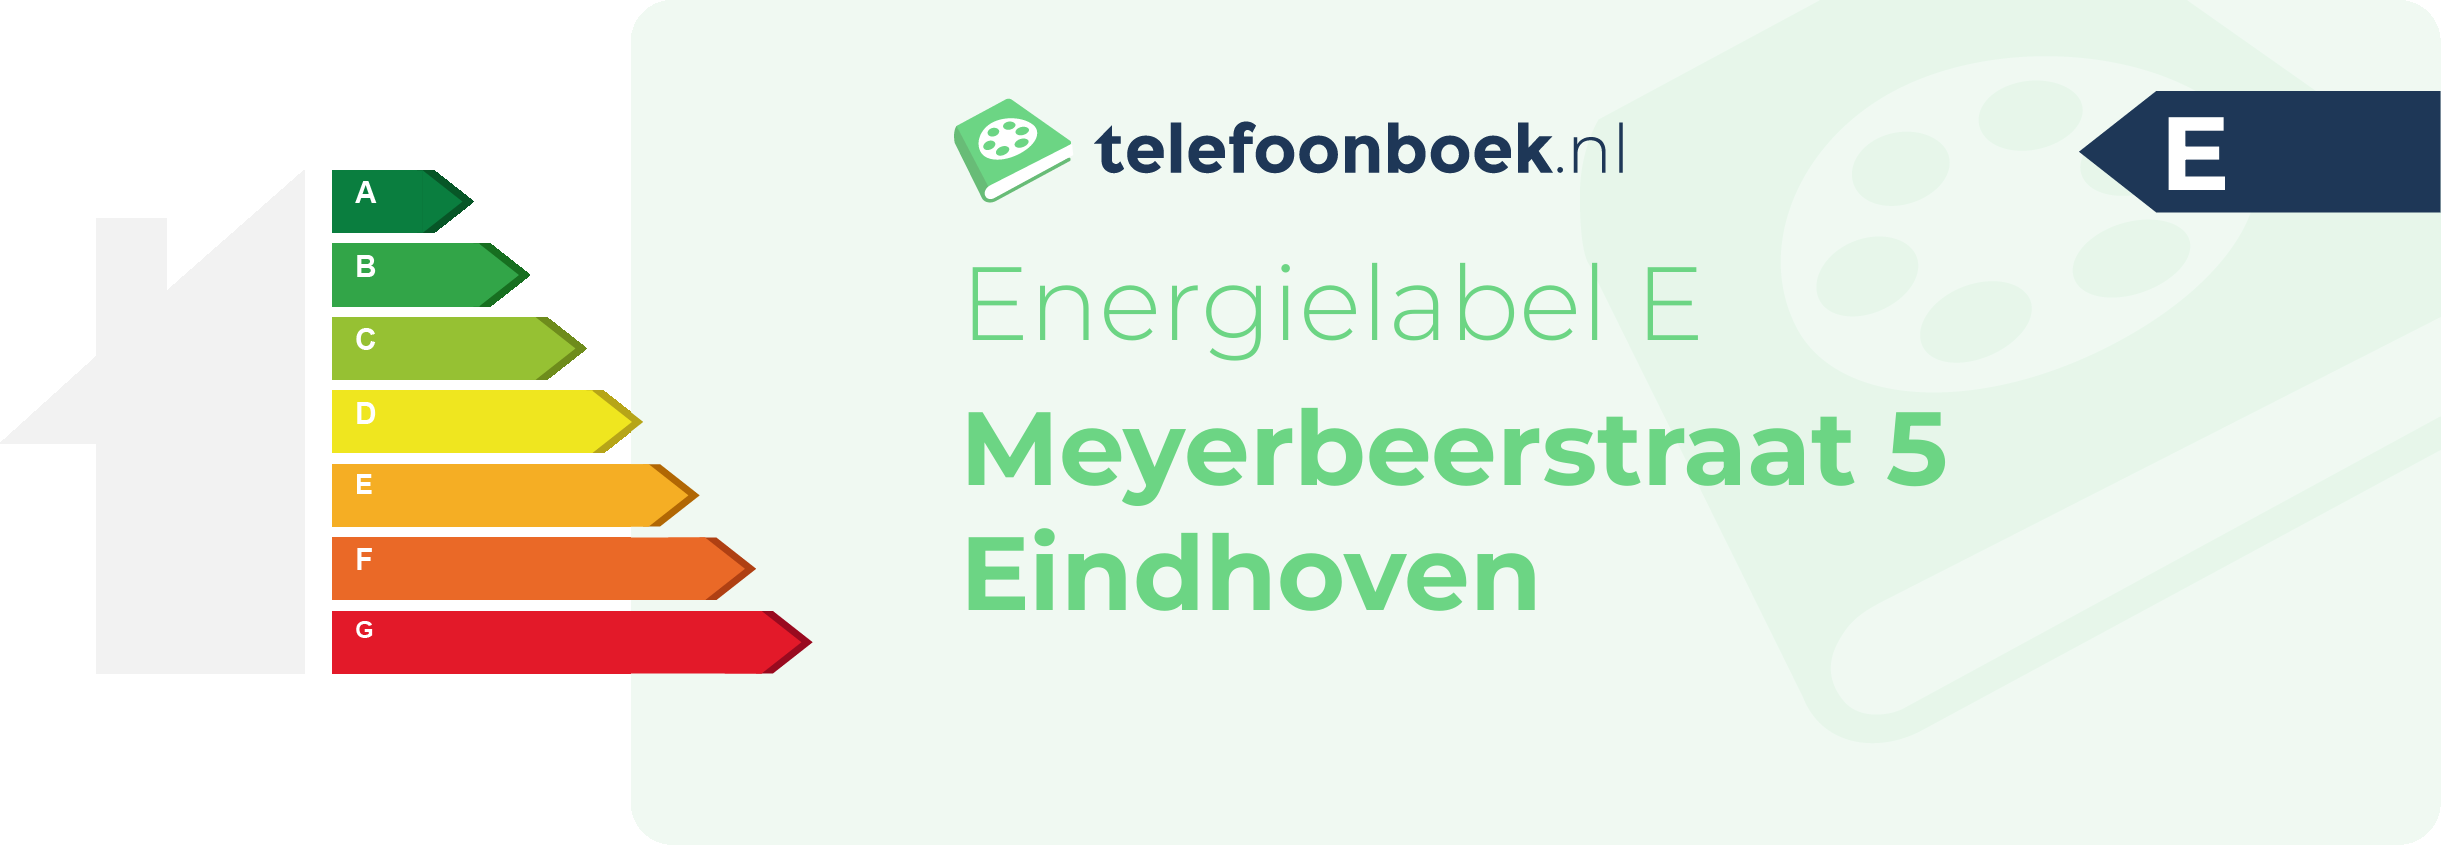 Energielabel Meyerbeerstraat 5 Eindhoven